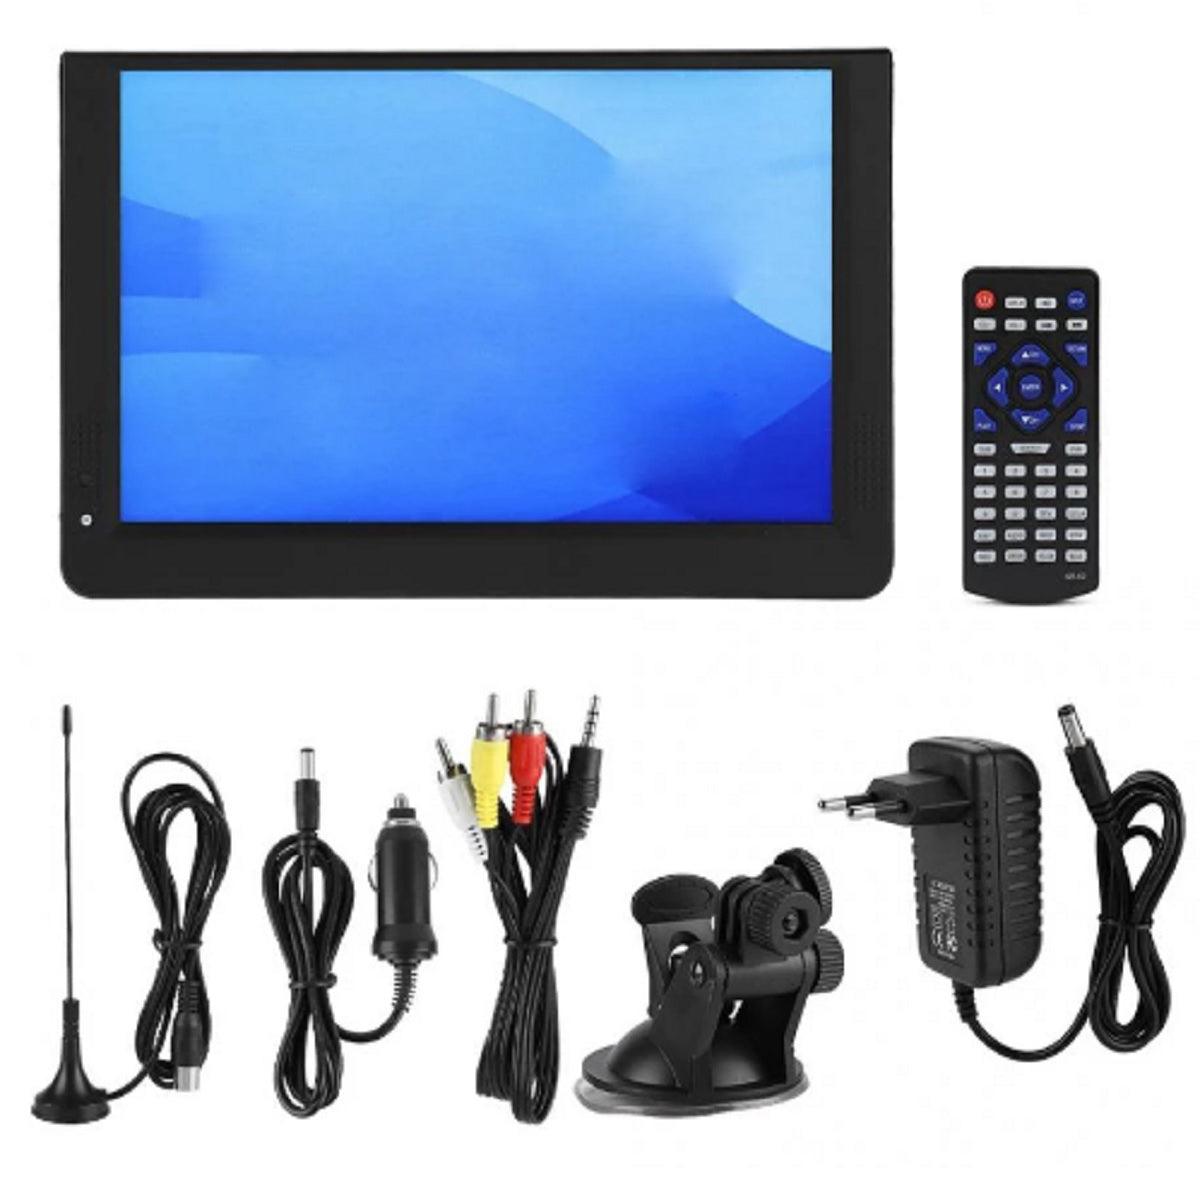 Leadstar D12 12 inch Portable Mini Television - Digital Support - dealskart.com.au